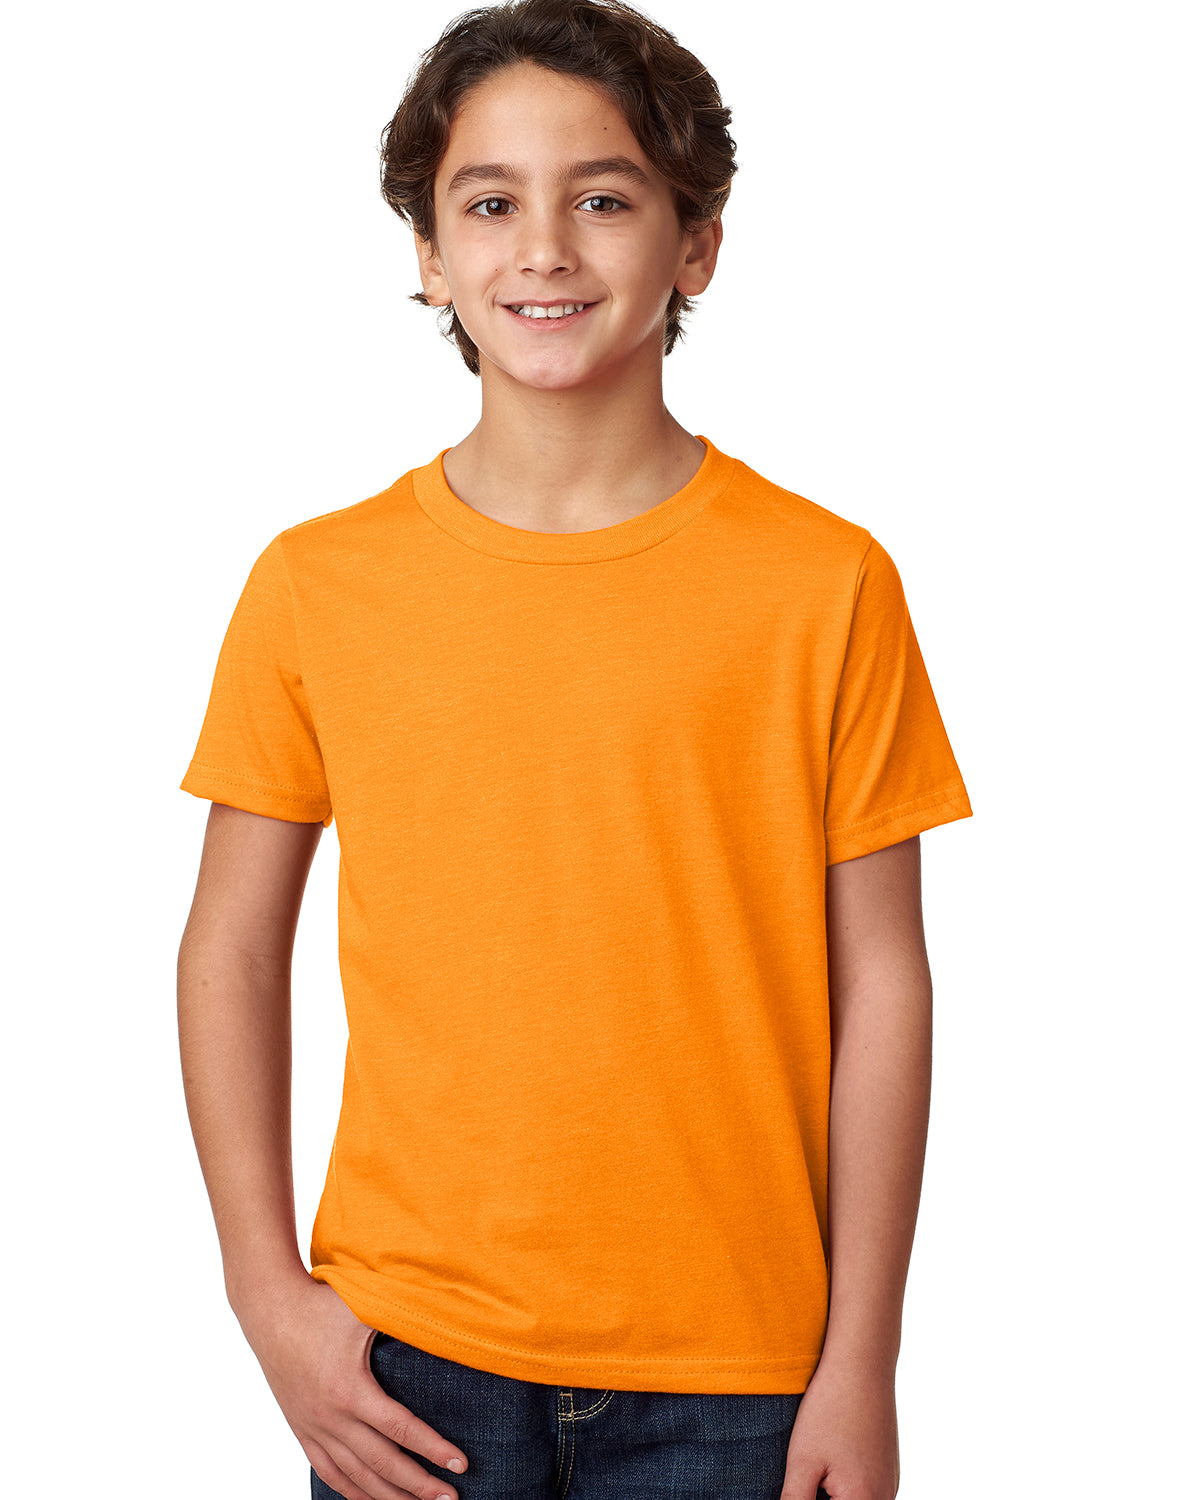 child model wearing next level youth CVC tee in orange